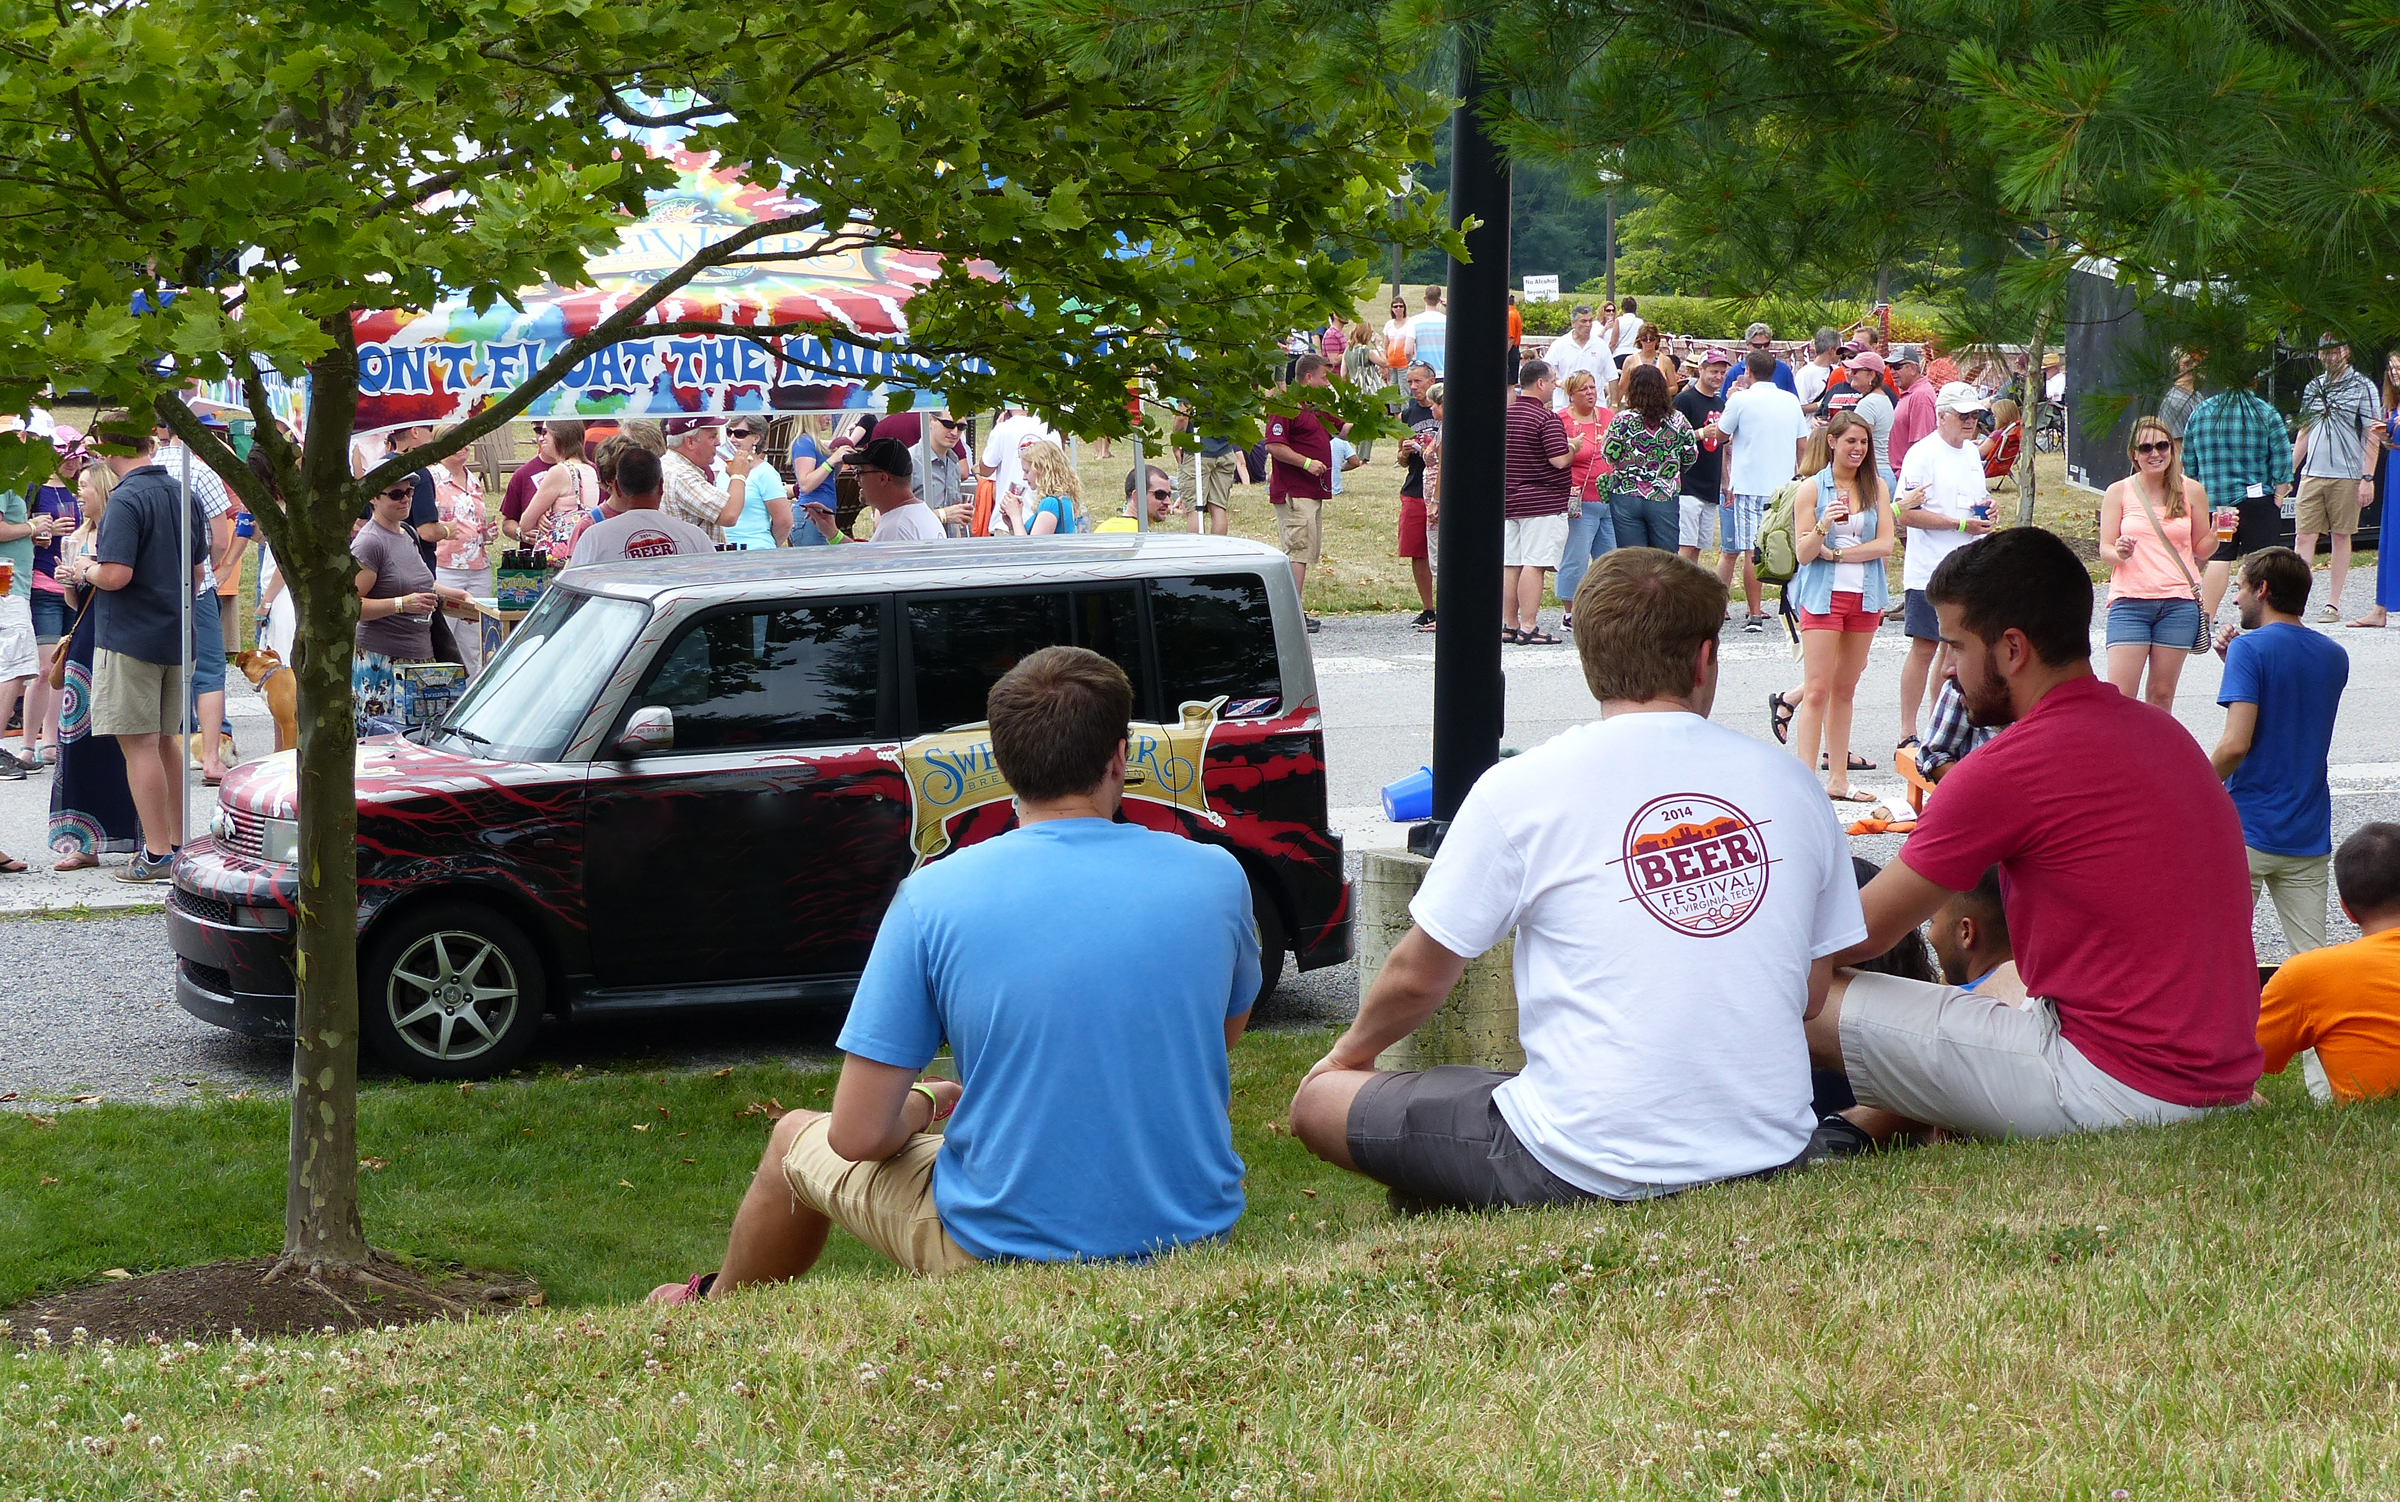 The Virginia Tech Alumni Association's summer beer festival is scheduled for June 27.